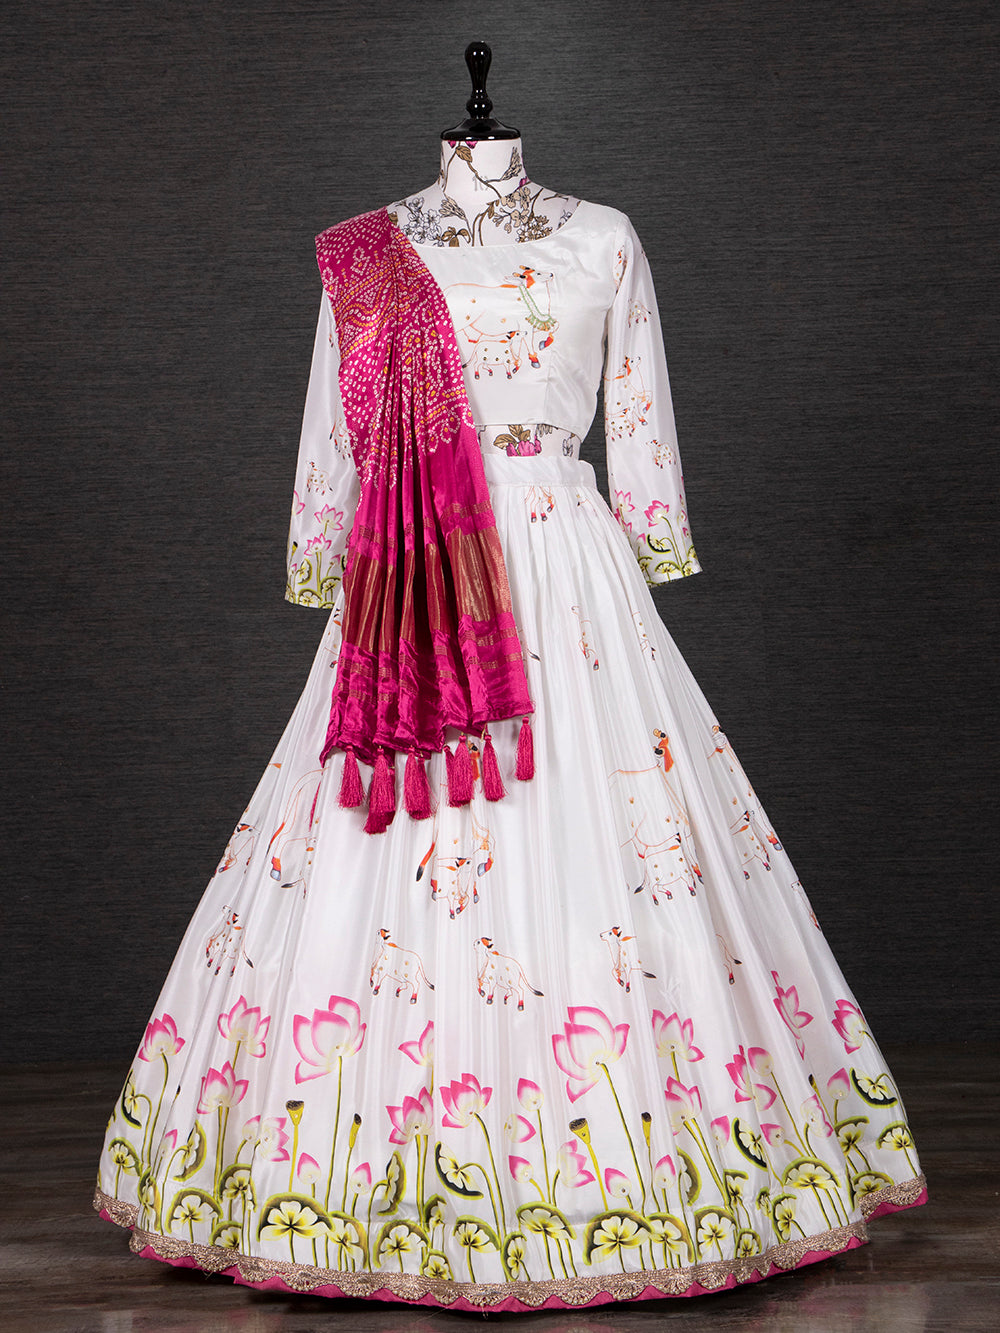 Inddus Dresses - Buy Inddus Dresses online in India